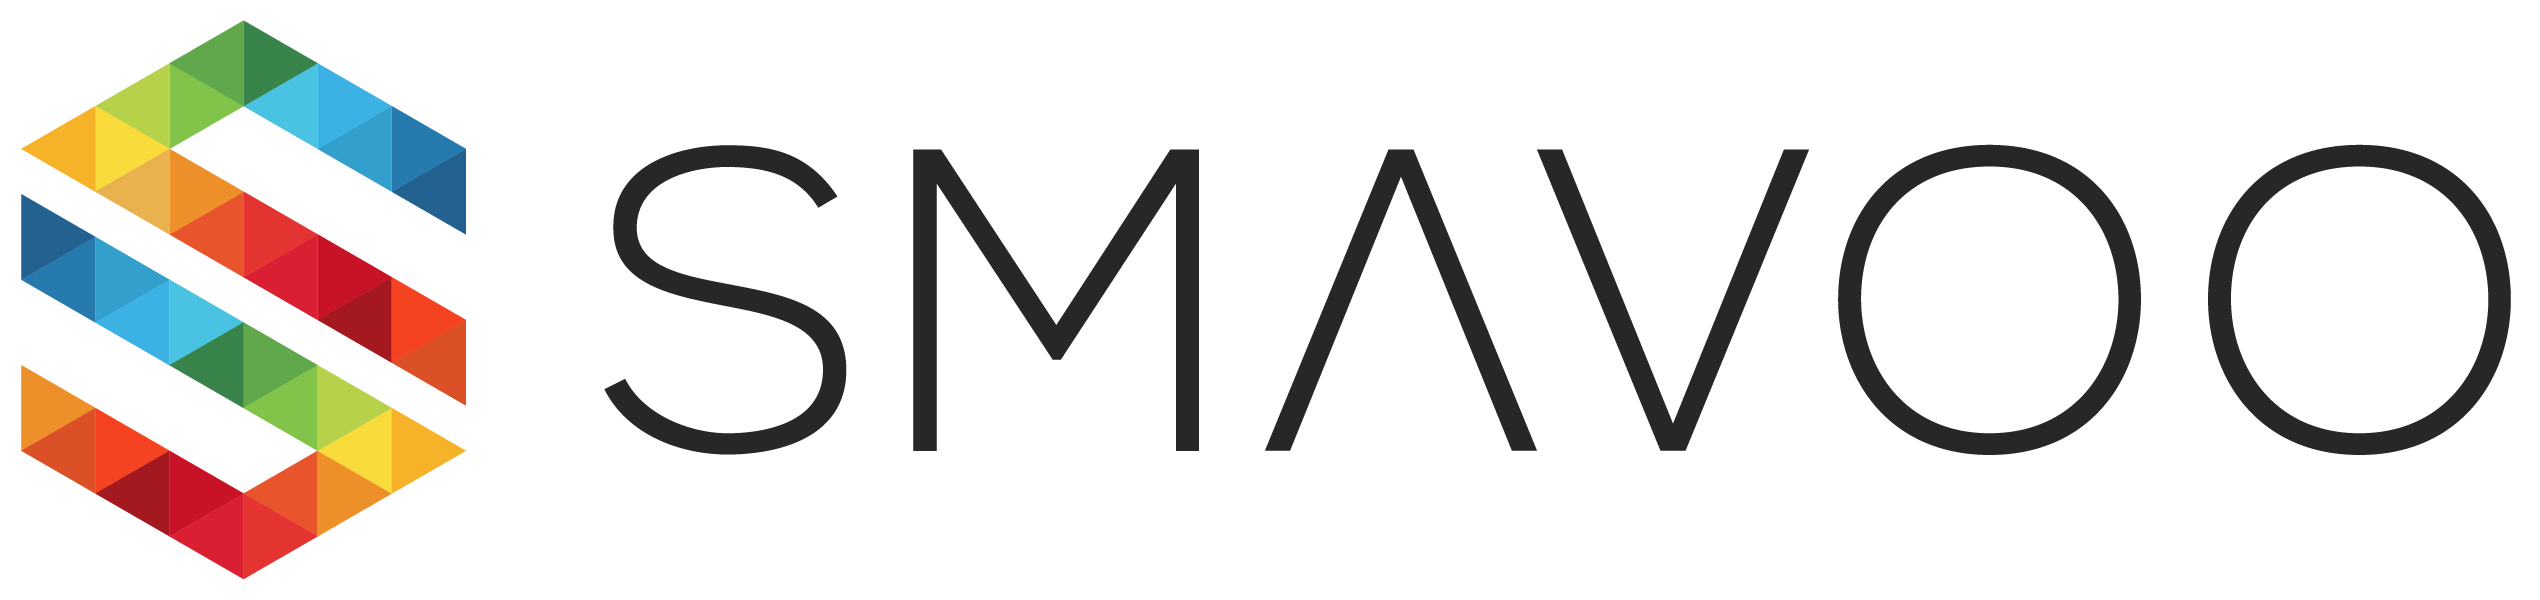 SMAVOO_logo